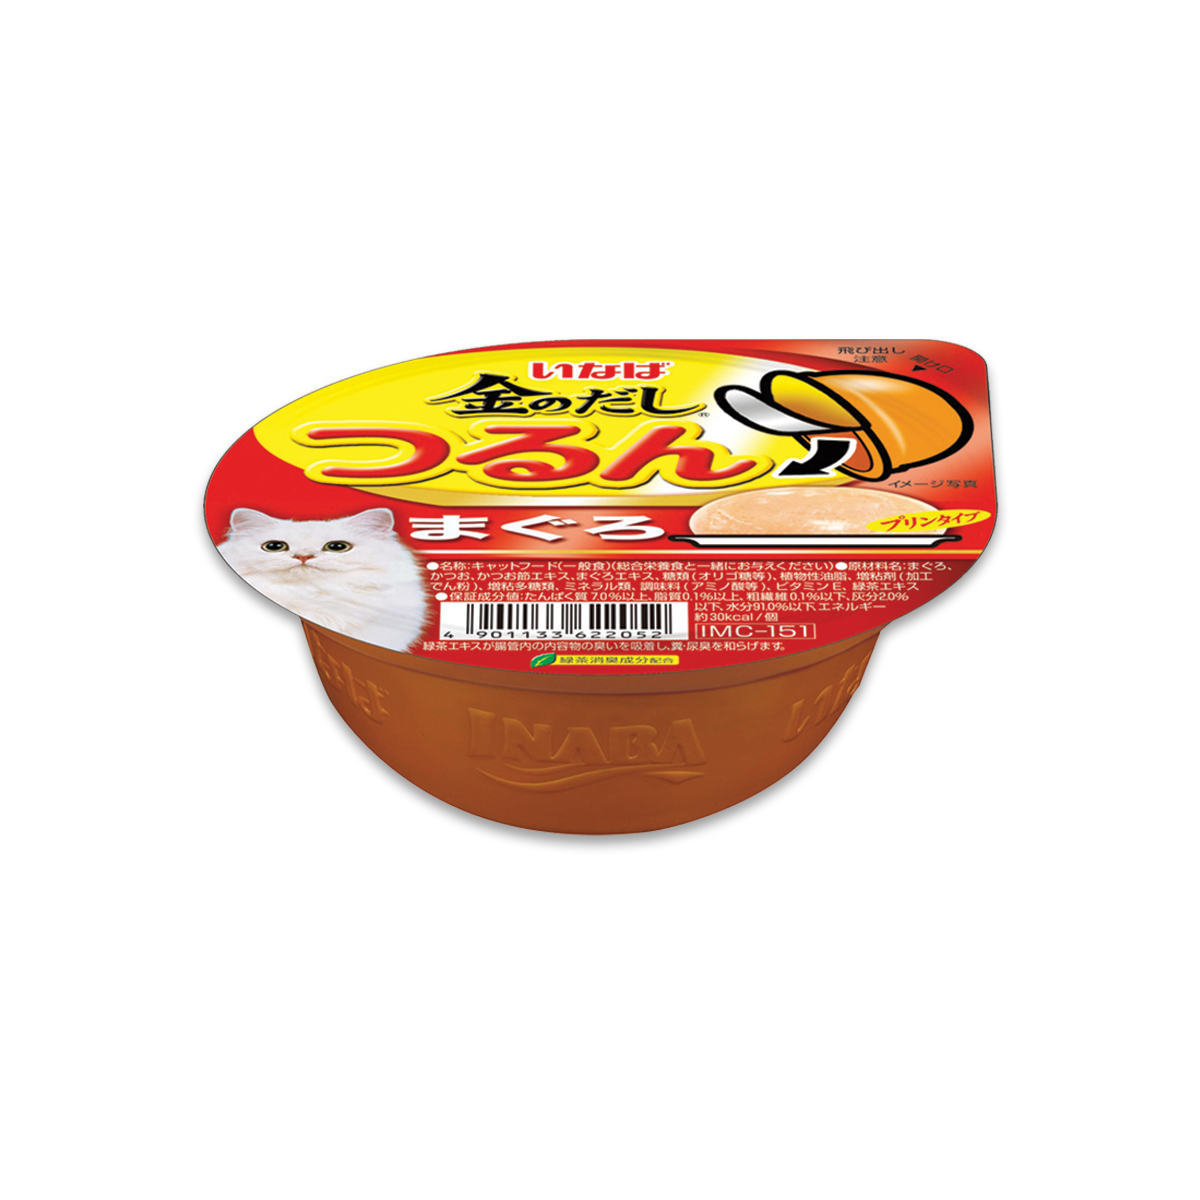 INABA Pudding Cup Tuna Yellow Fin Flavor อินาบะ พุดดิ้งคัพ อาหารเปียกแมวชนิดถ้วย รสทูน่าเยลโล่ฟิน ขนาด 65 กรัม